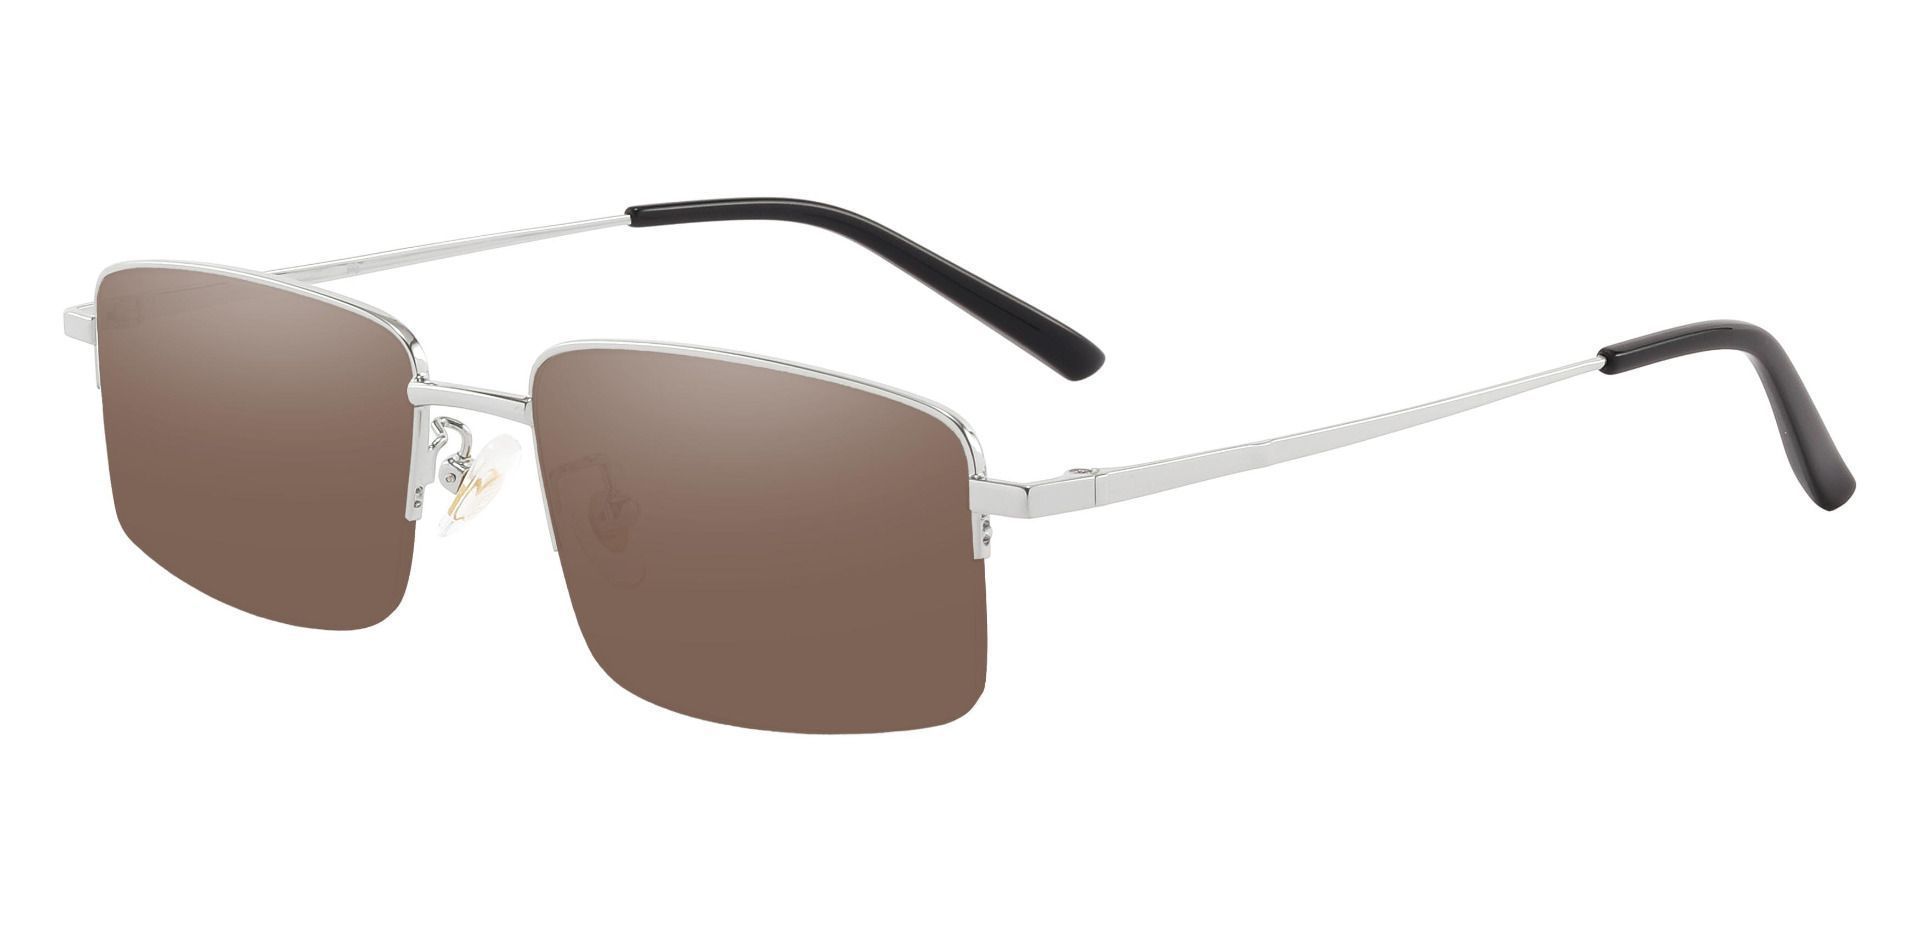 Wayne Rectangle Progressive Sunglasses - Silver Frame With Brown Lenses